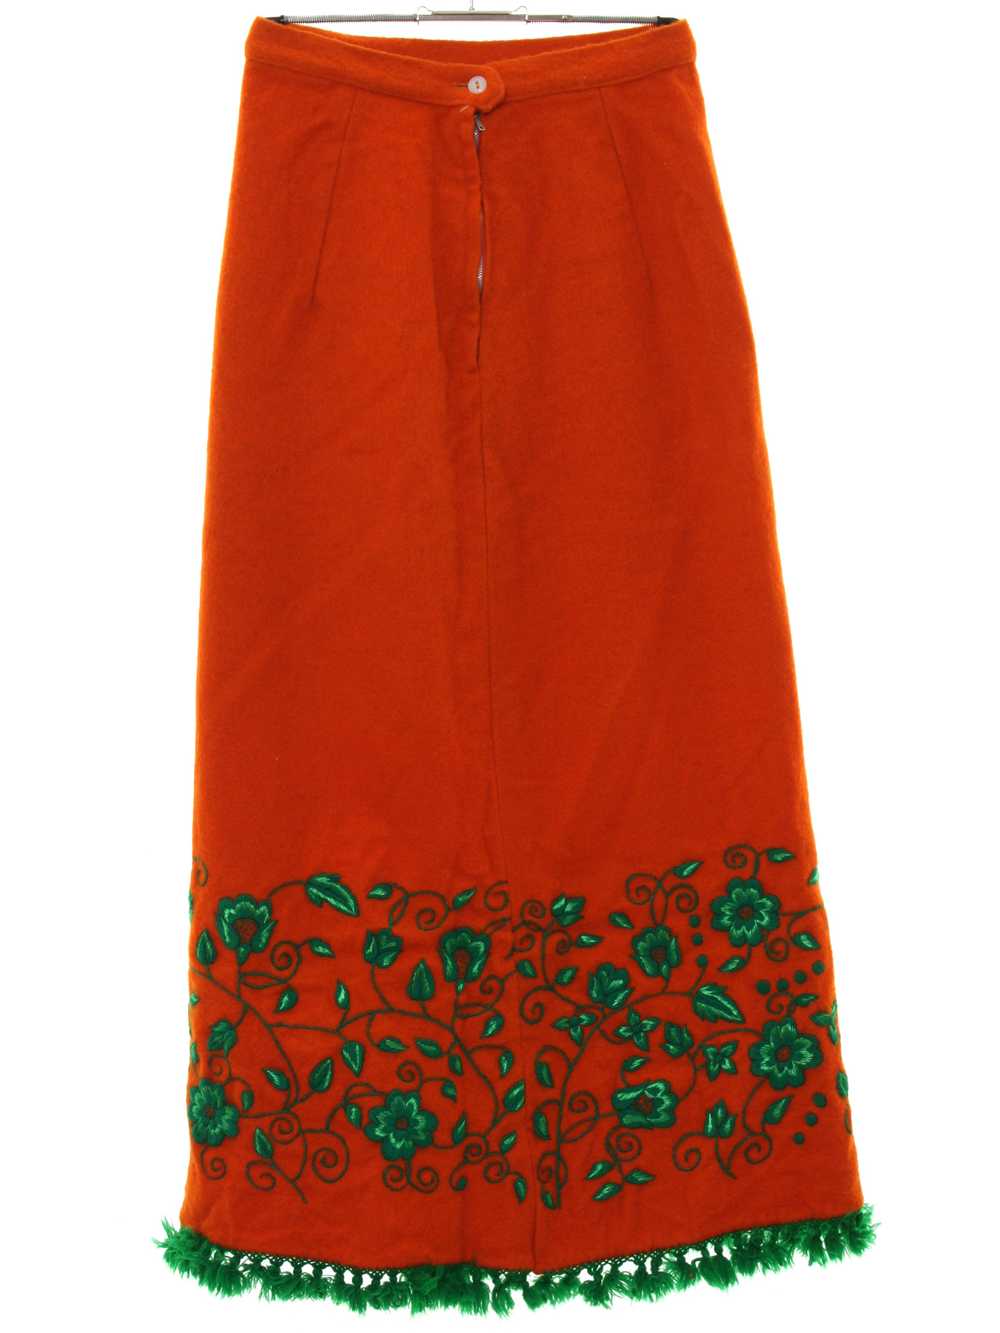 1960's Hippie Skirt - image 3